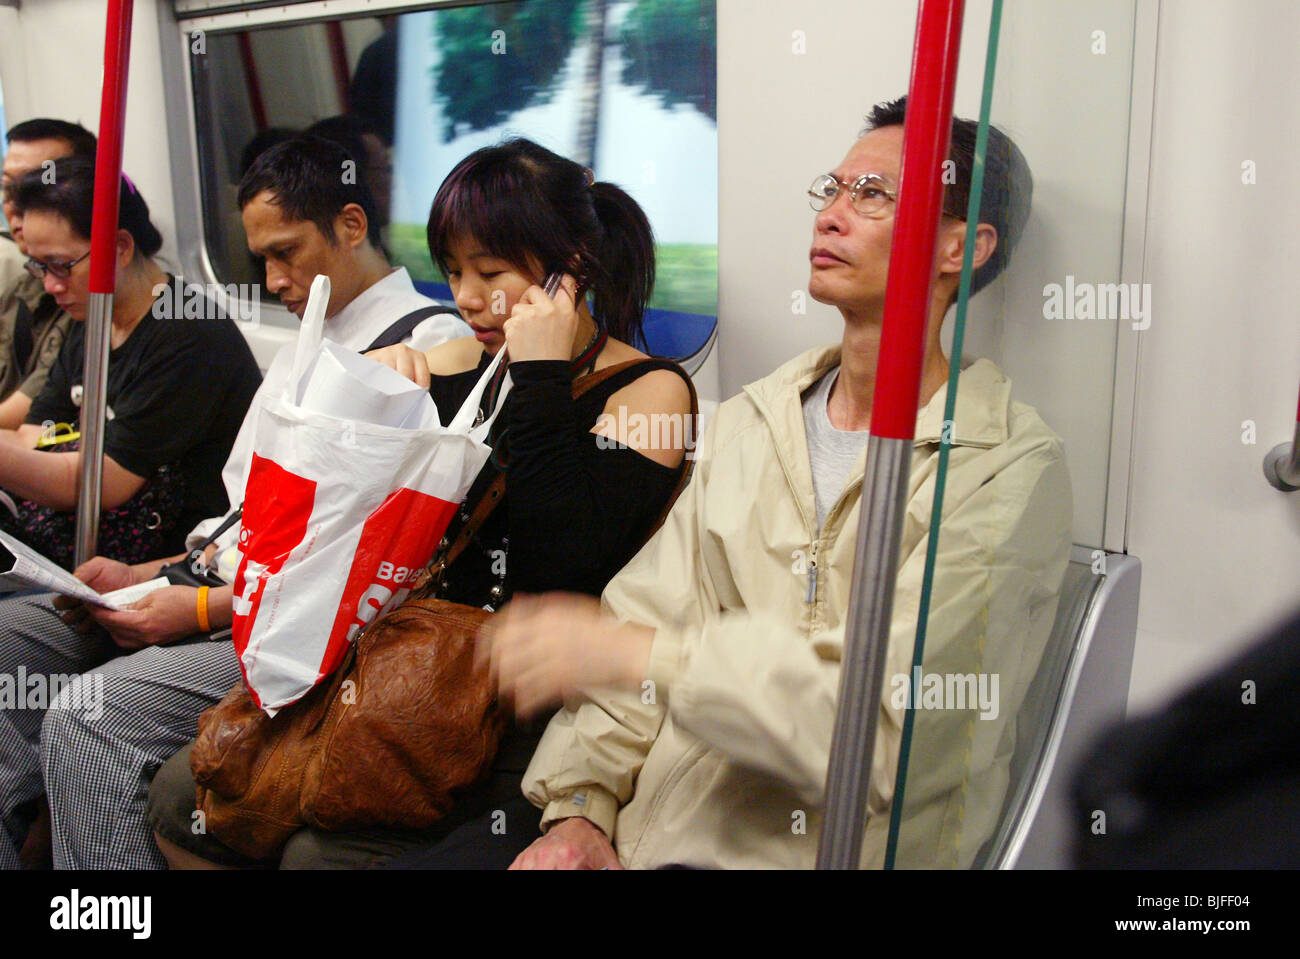 La gente in una metropolitana, Hong Kong, Cina Foto Stock